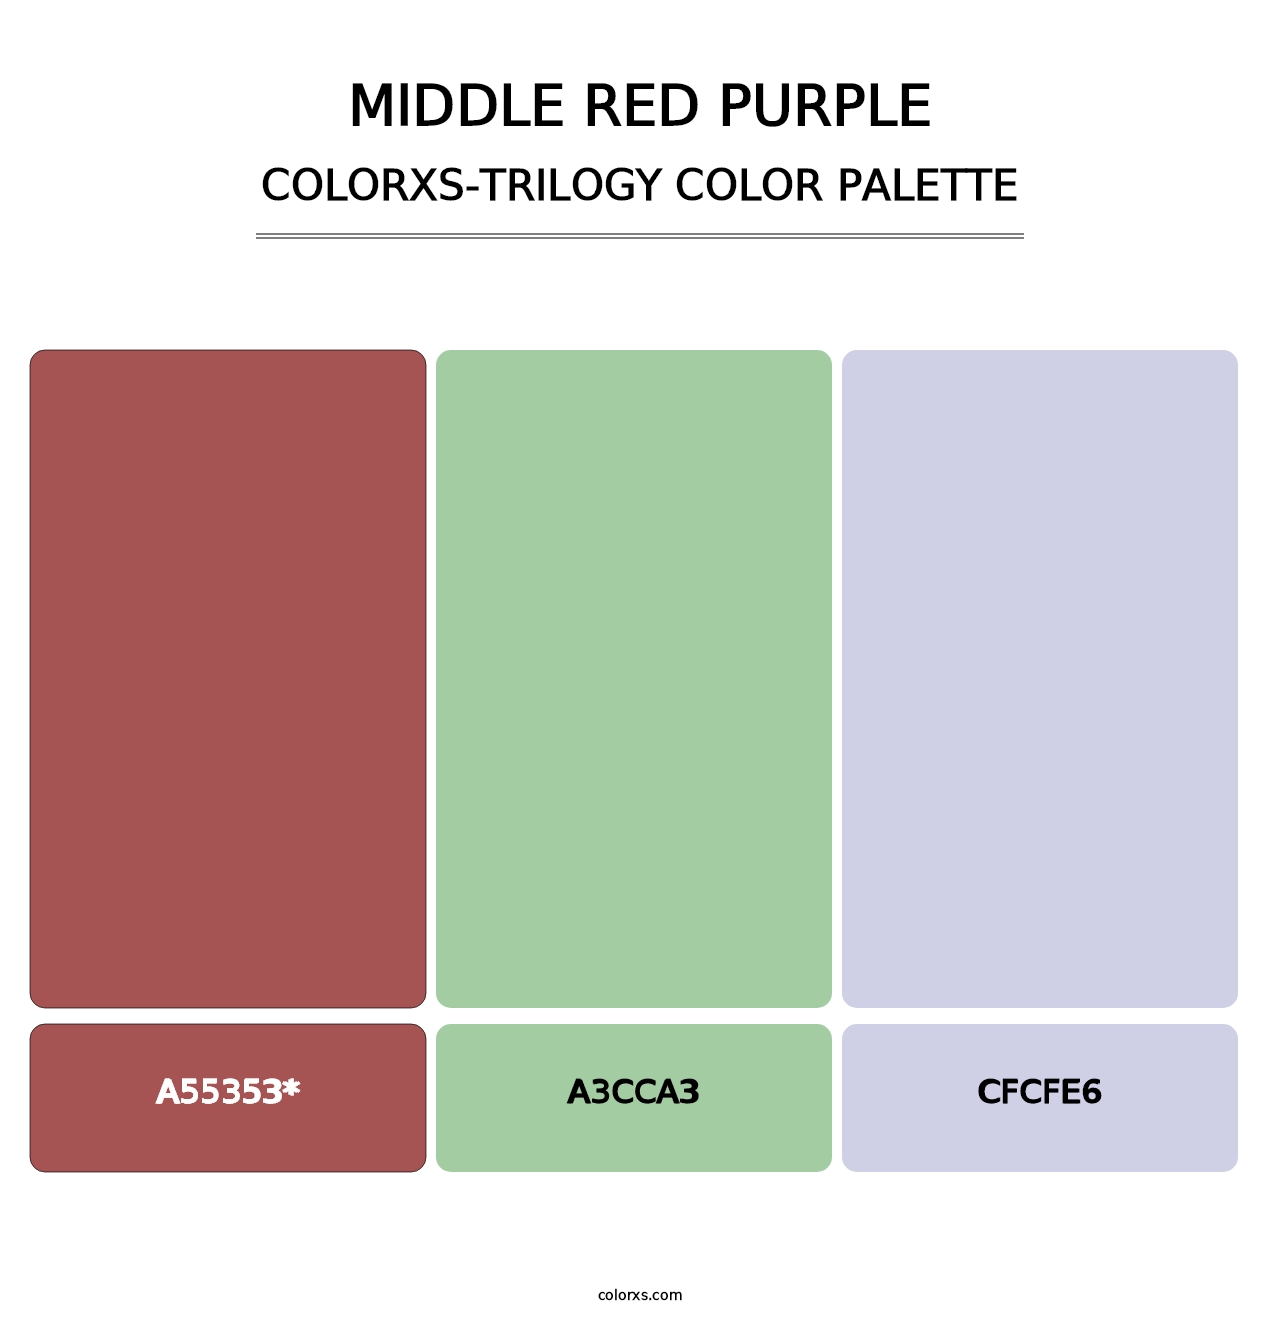 Middle Red Purple - Colorxs Trilogy Palette